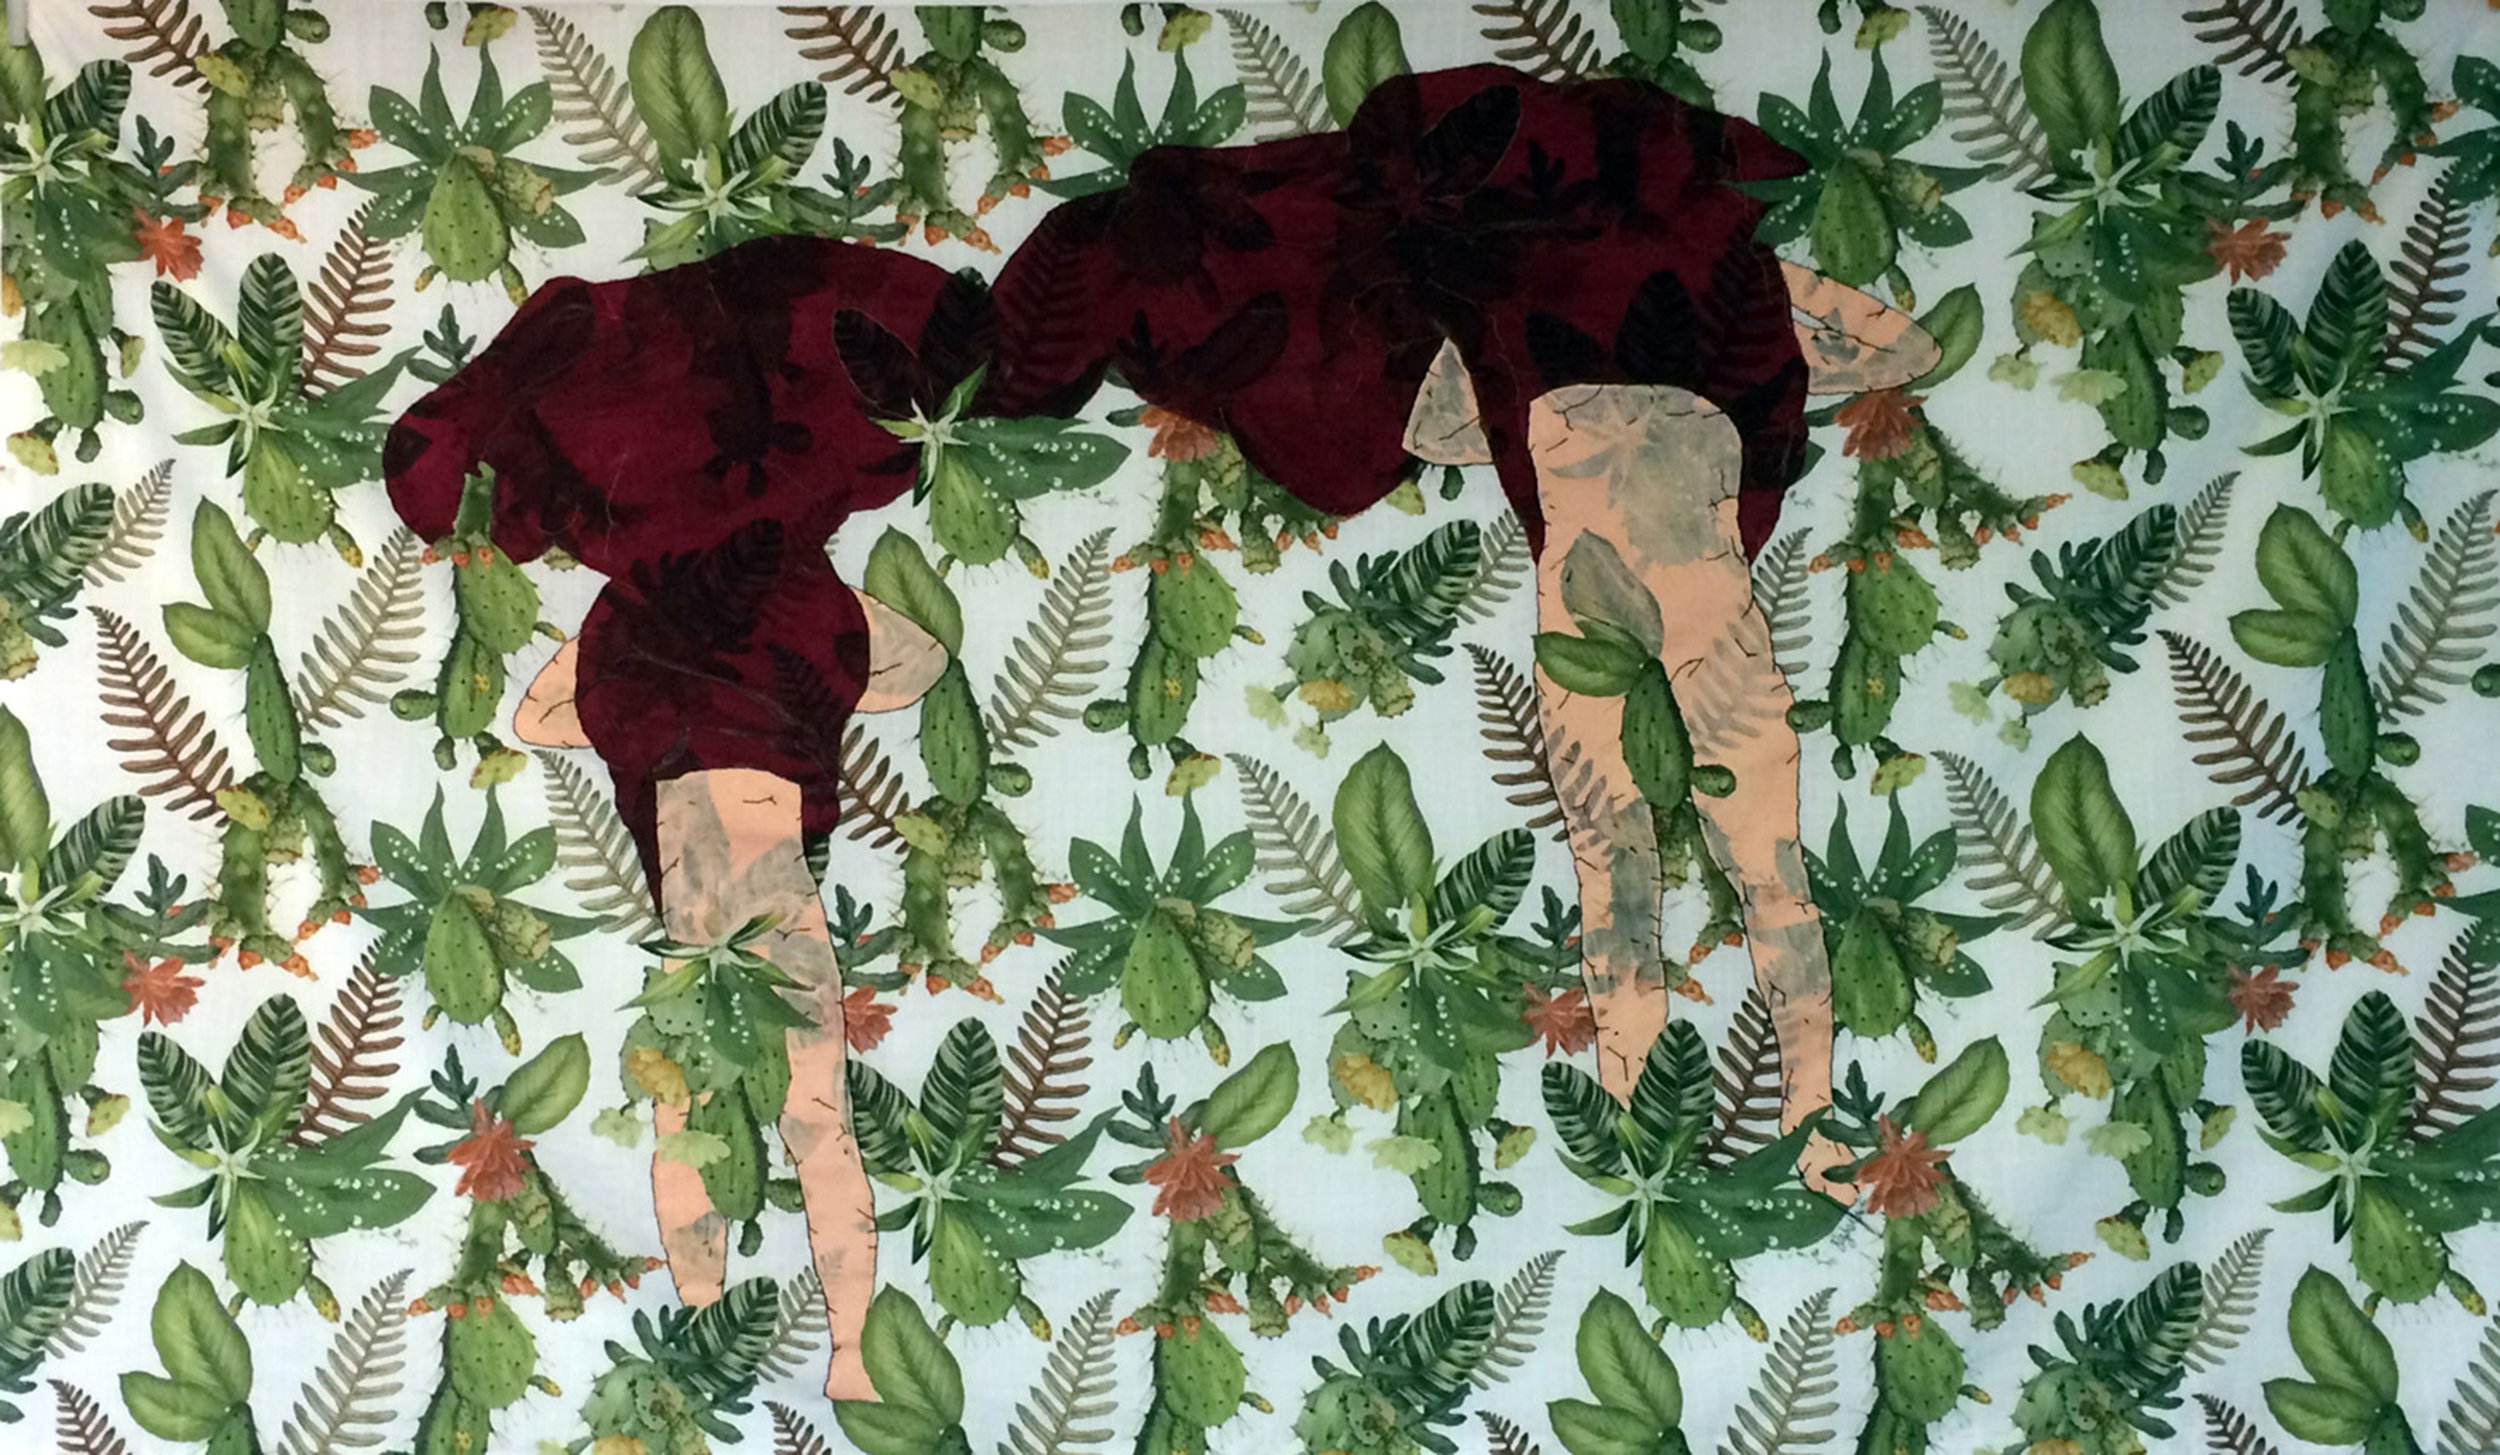  Perfect Match, 2018, Stitching on found fabric, 88 x 148 cm. 